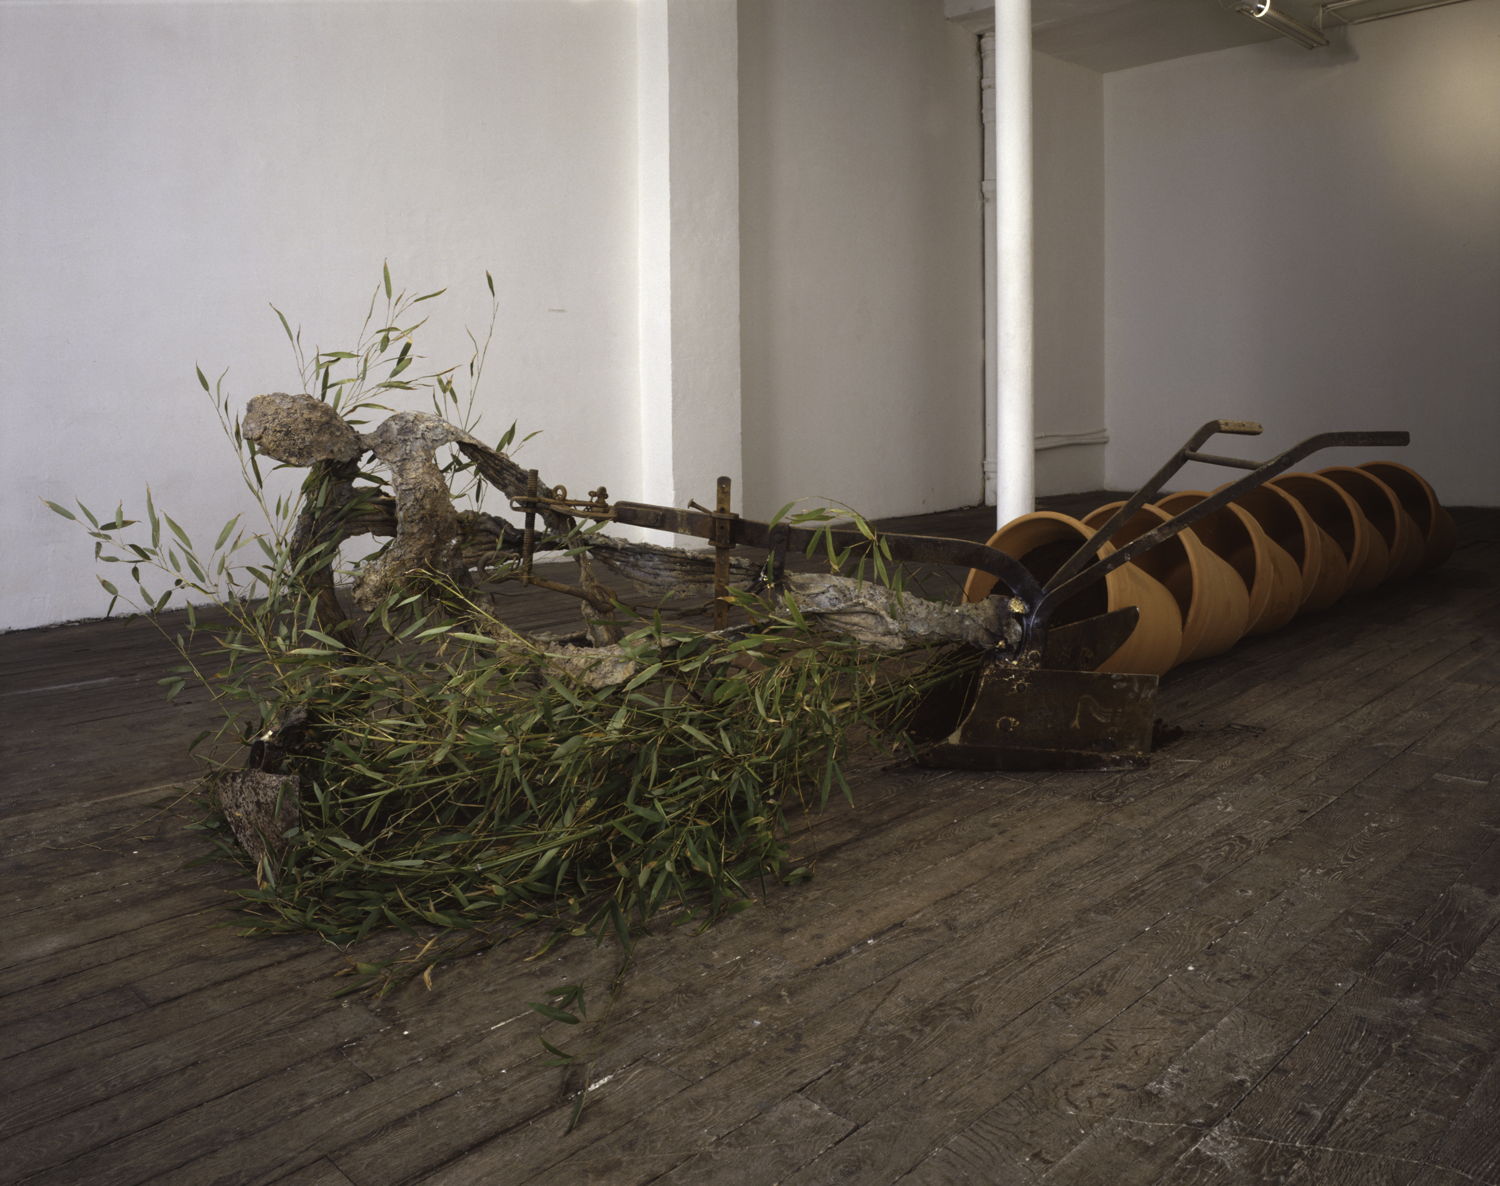 Giuseppe Penone, Procedere in verticale, bronze, terre, végétation, terre cuite, 86 x 178 x 515 cm, 1985. Photo : ©Nanda Lanfranco 